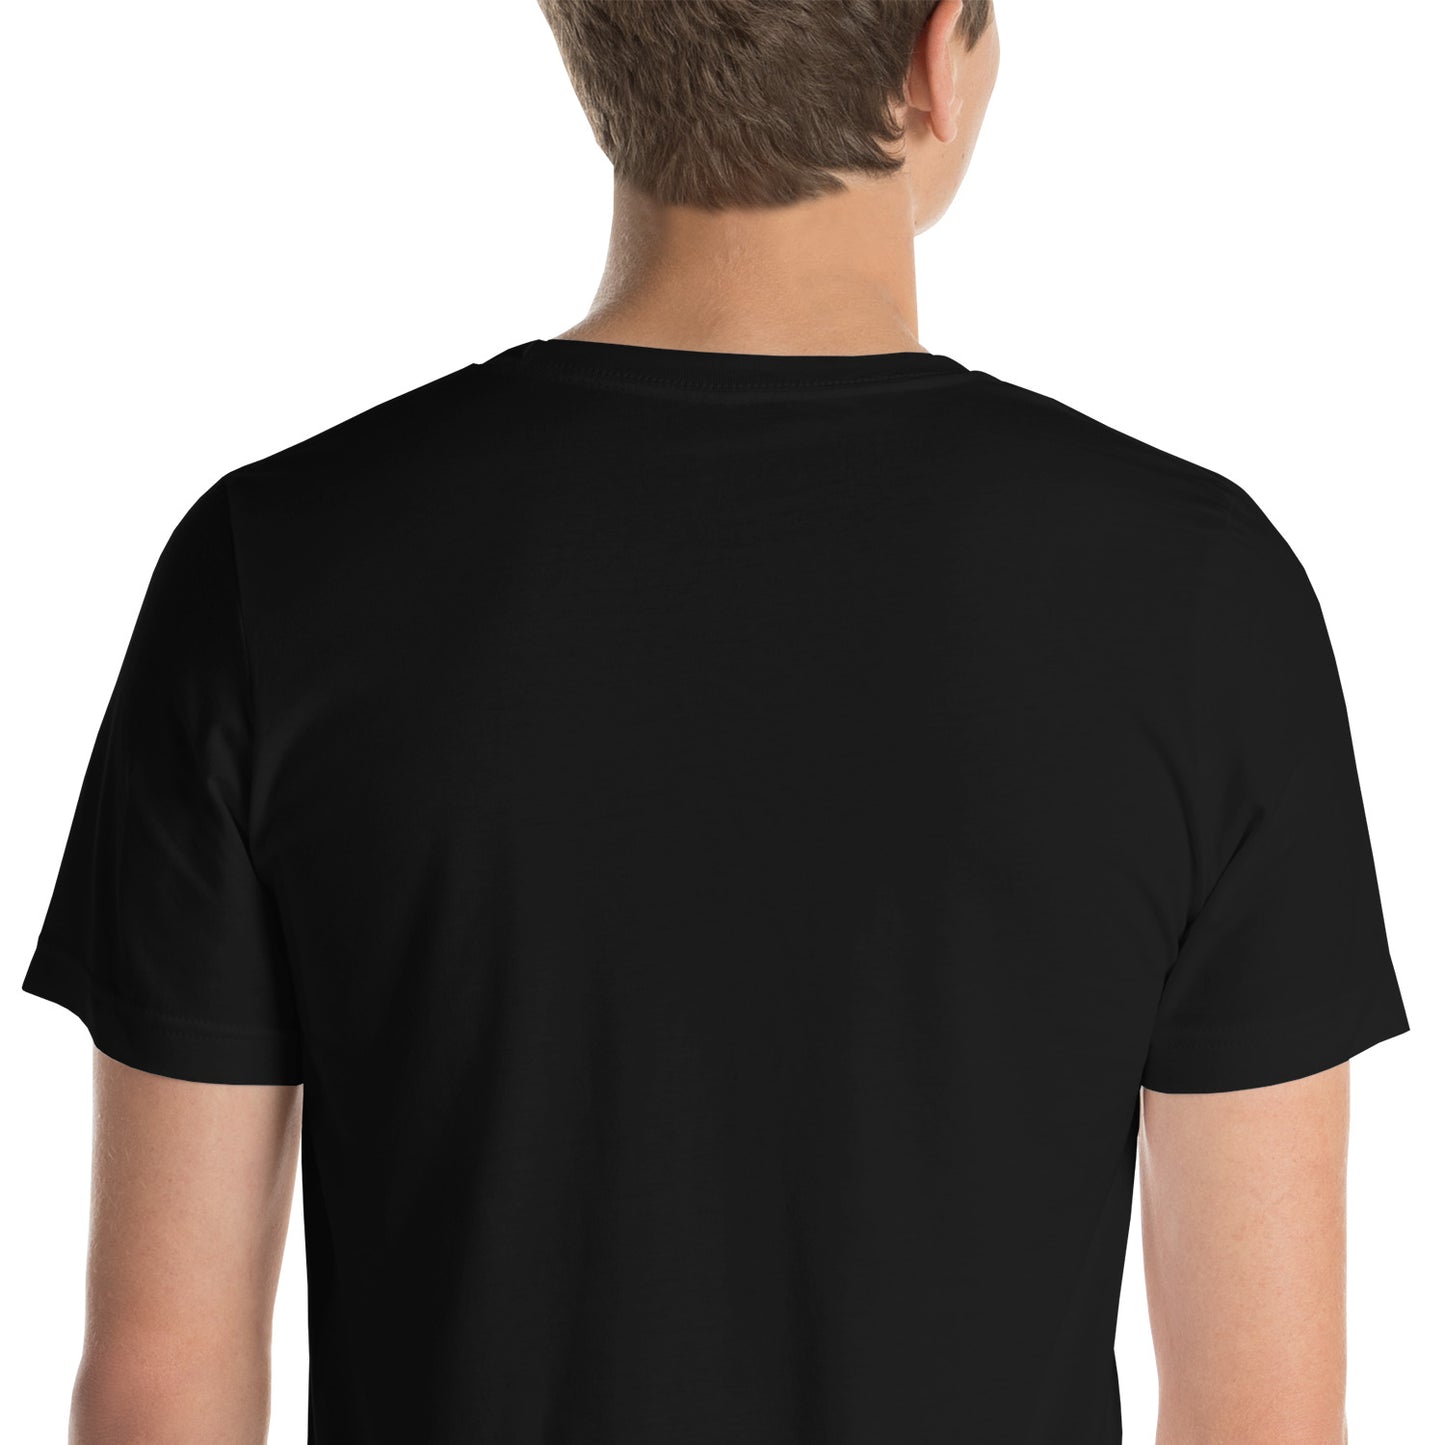 Ethereum Circle T-Shirt